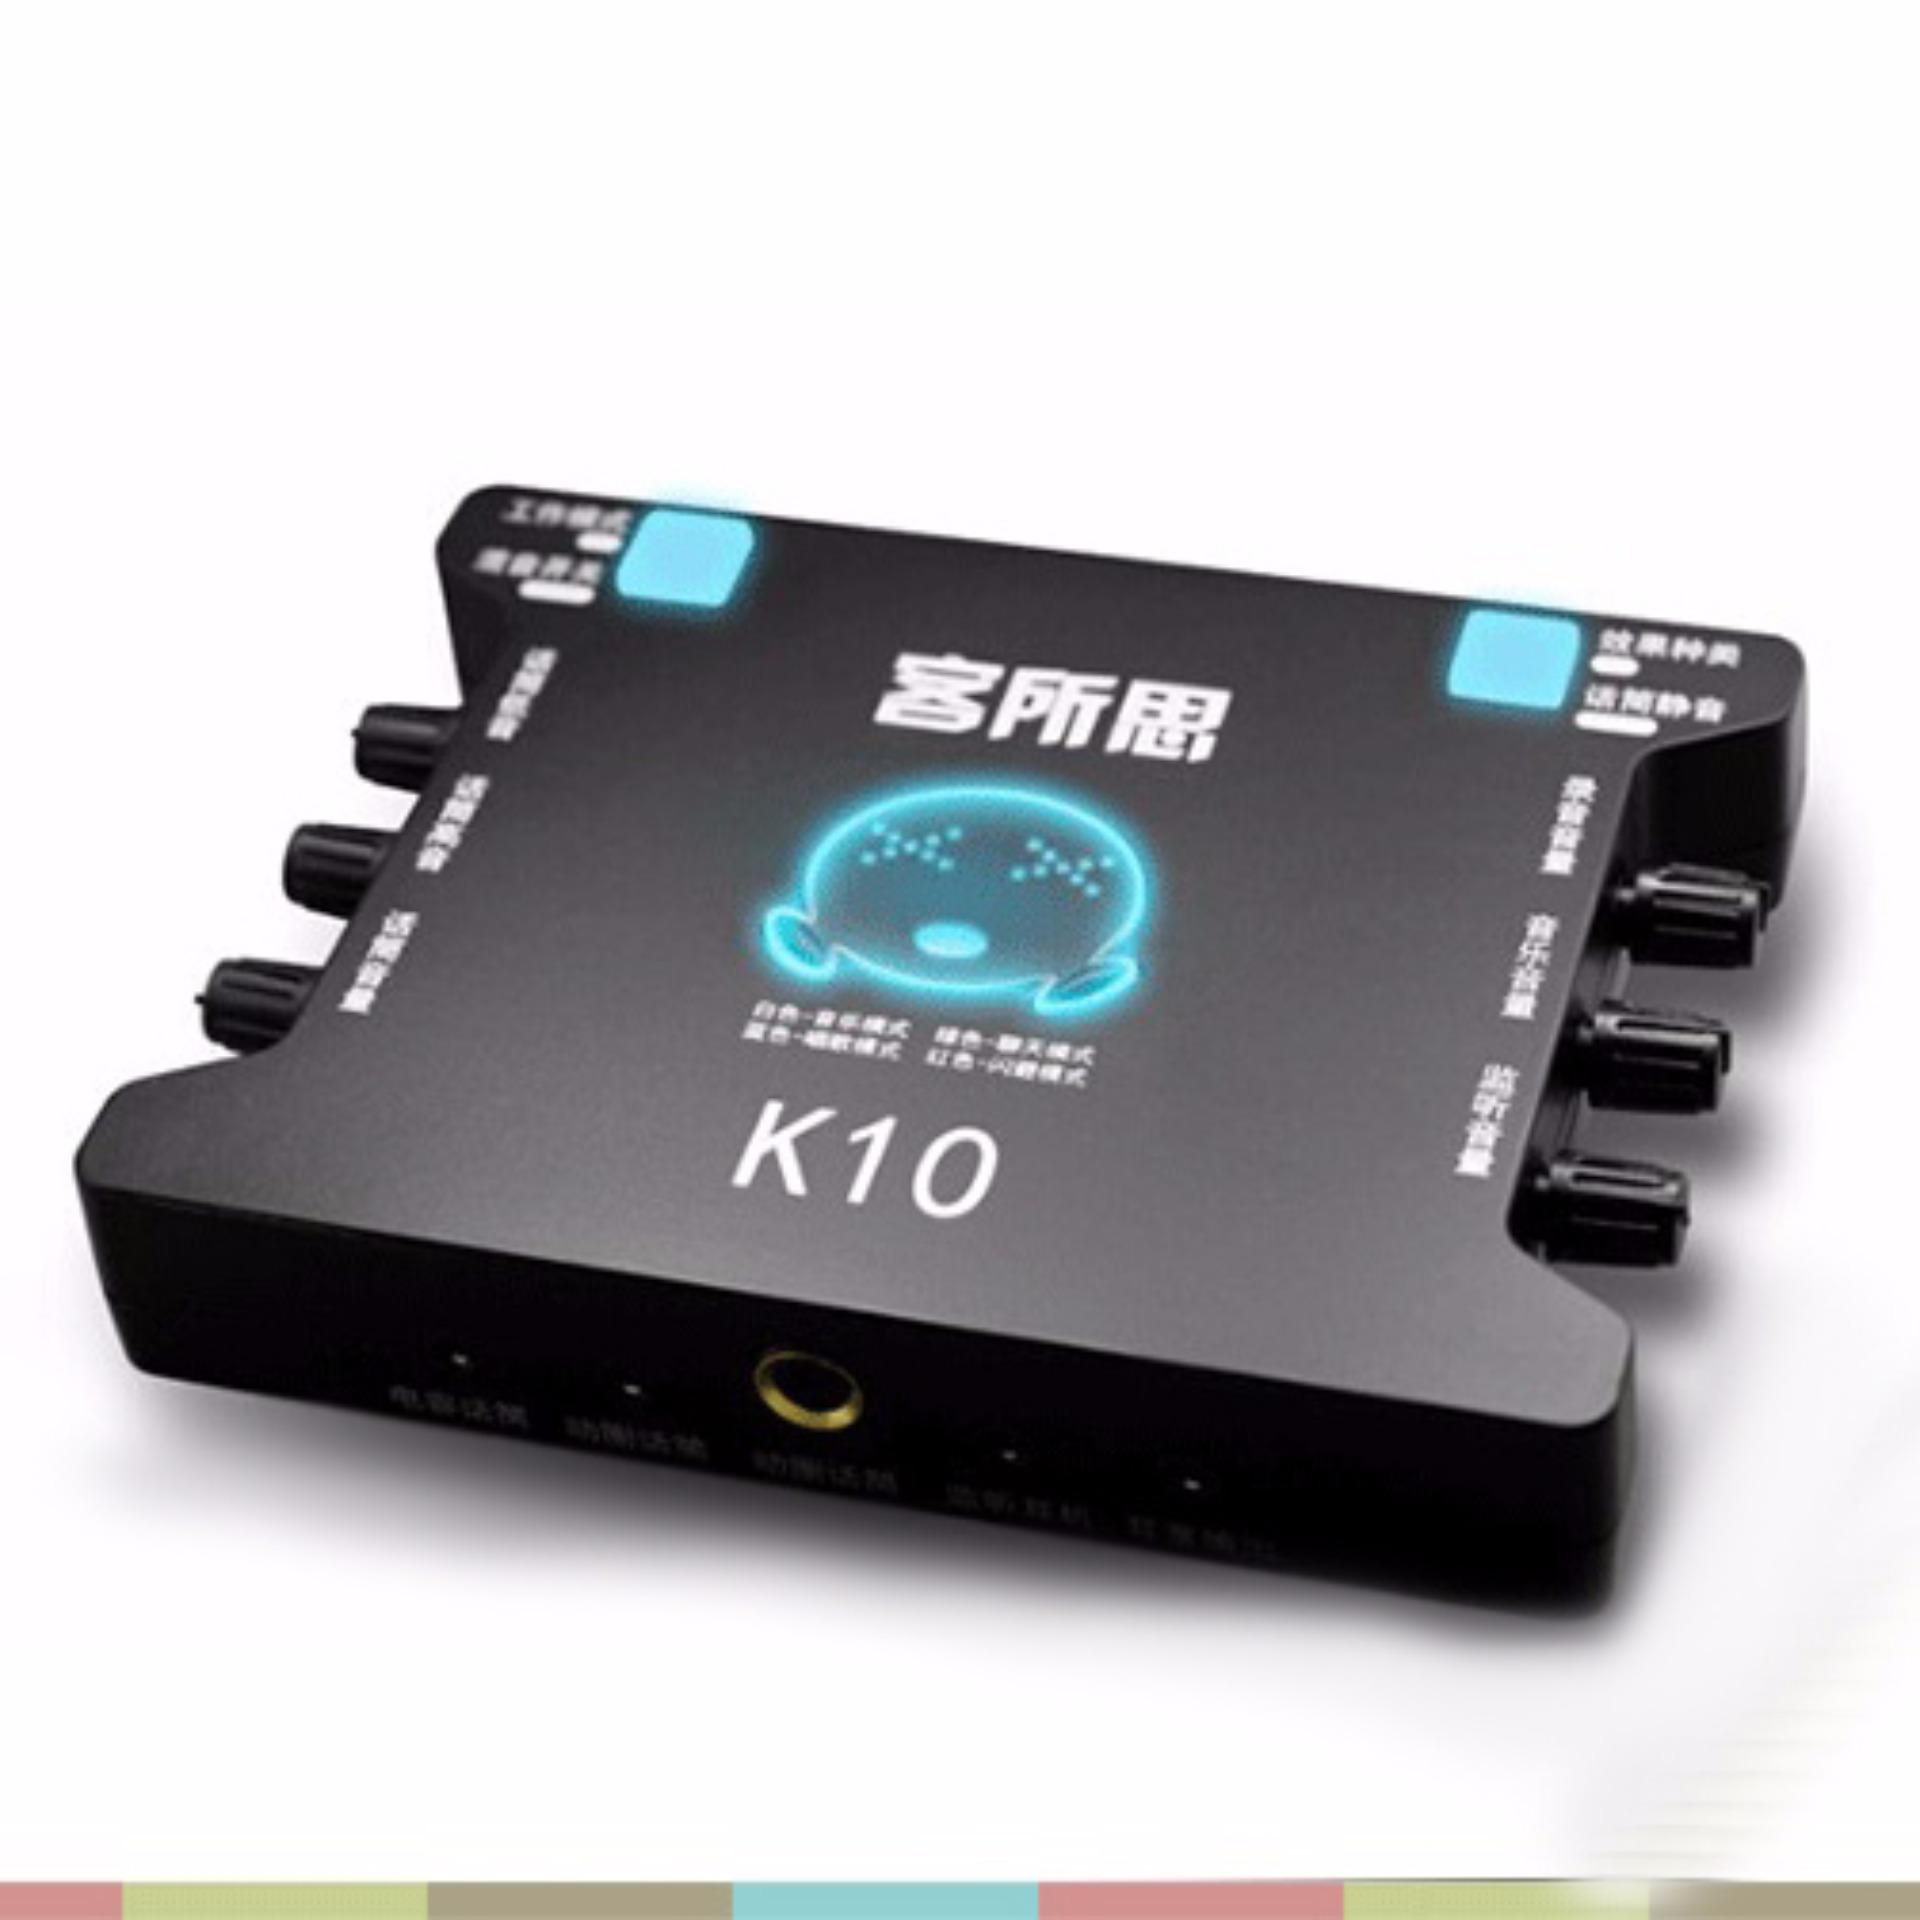 Card sound hỗ trợ hát karaoke livestream cắm ngoài USB - XOX K10 (Đen)